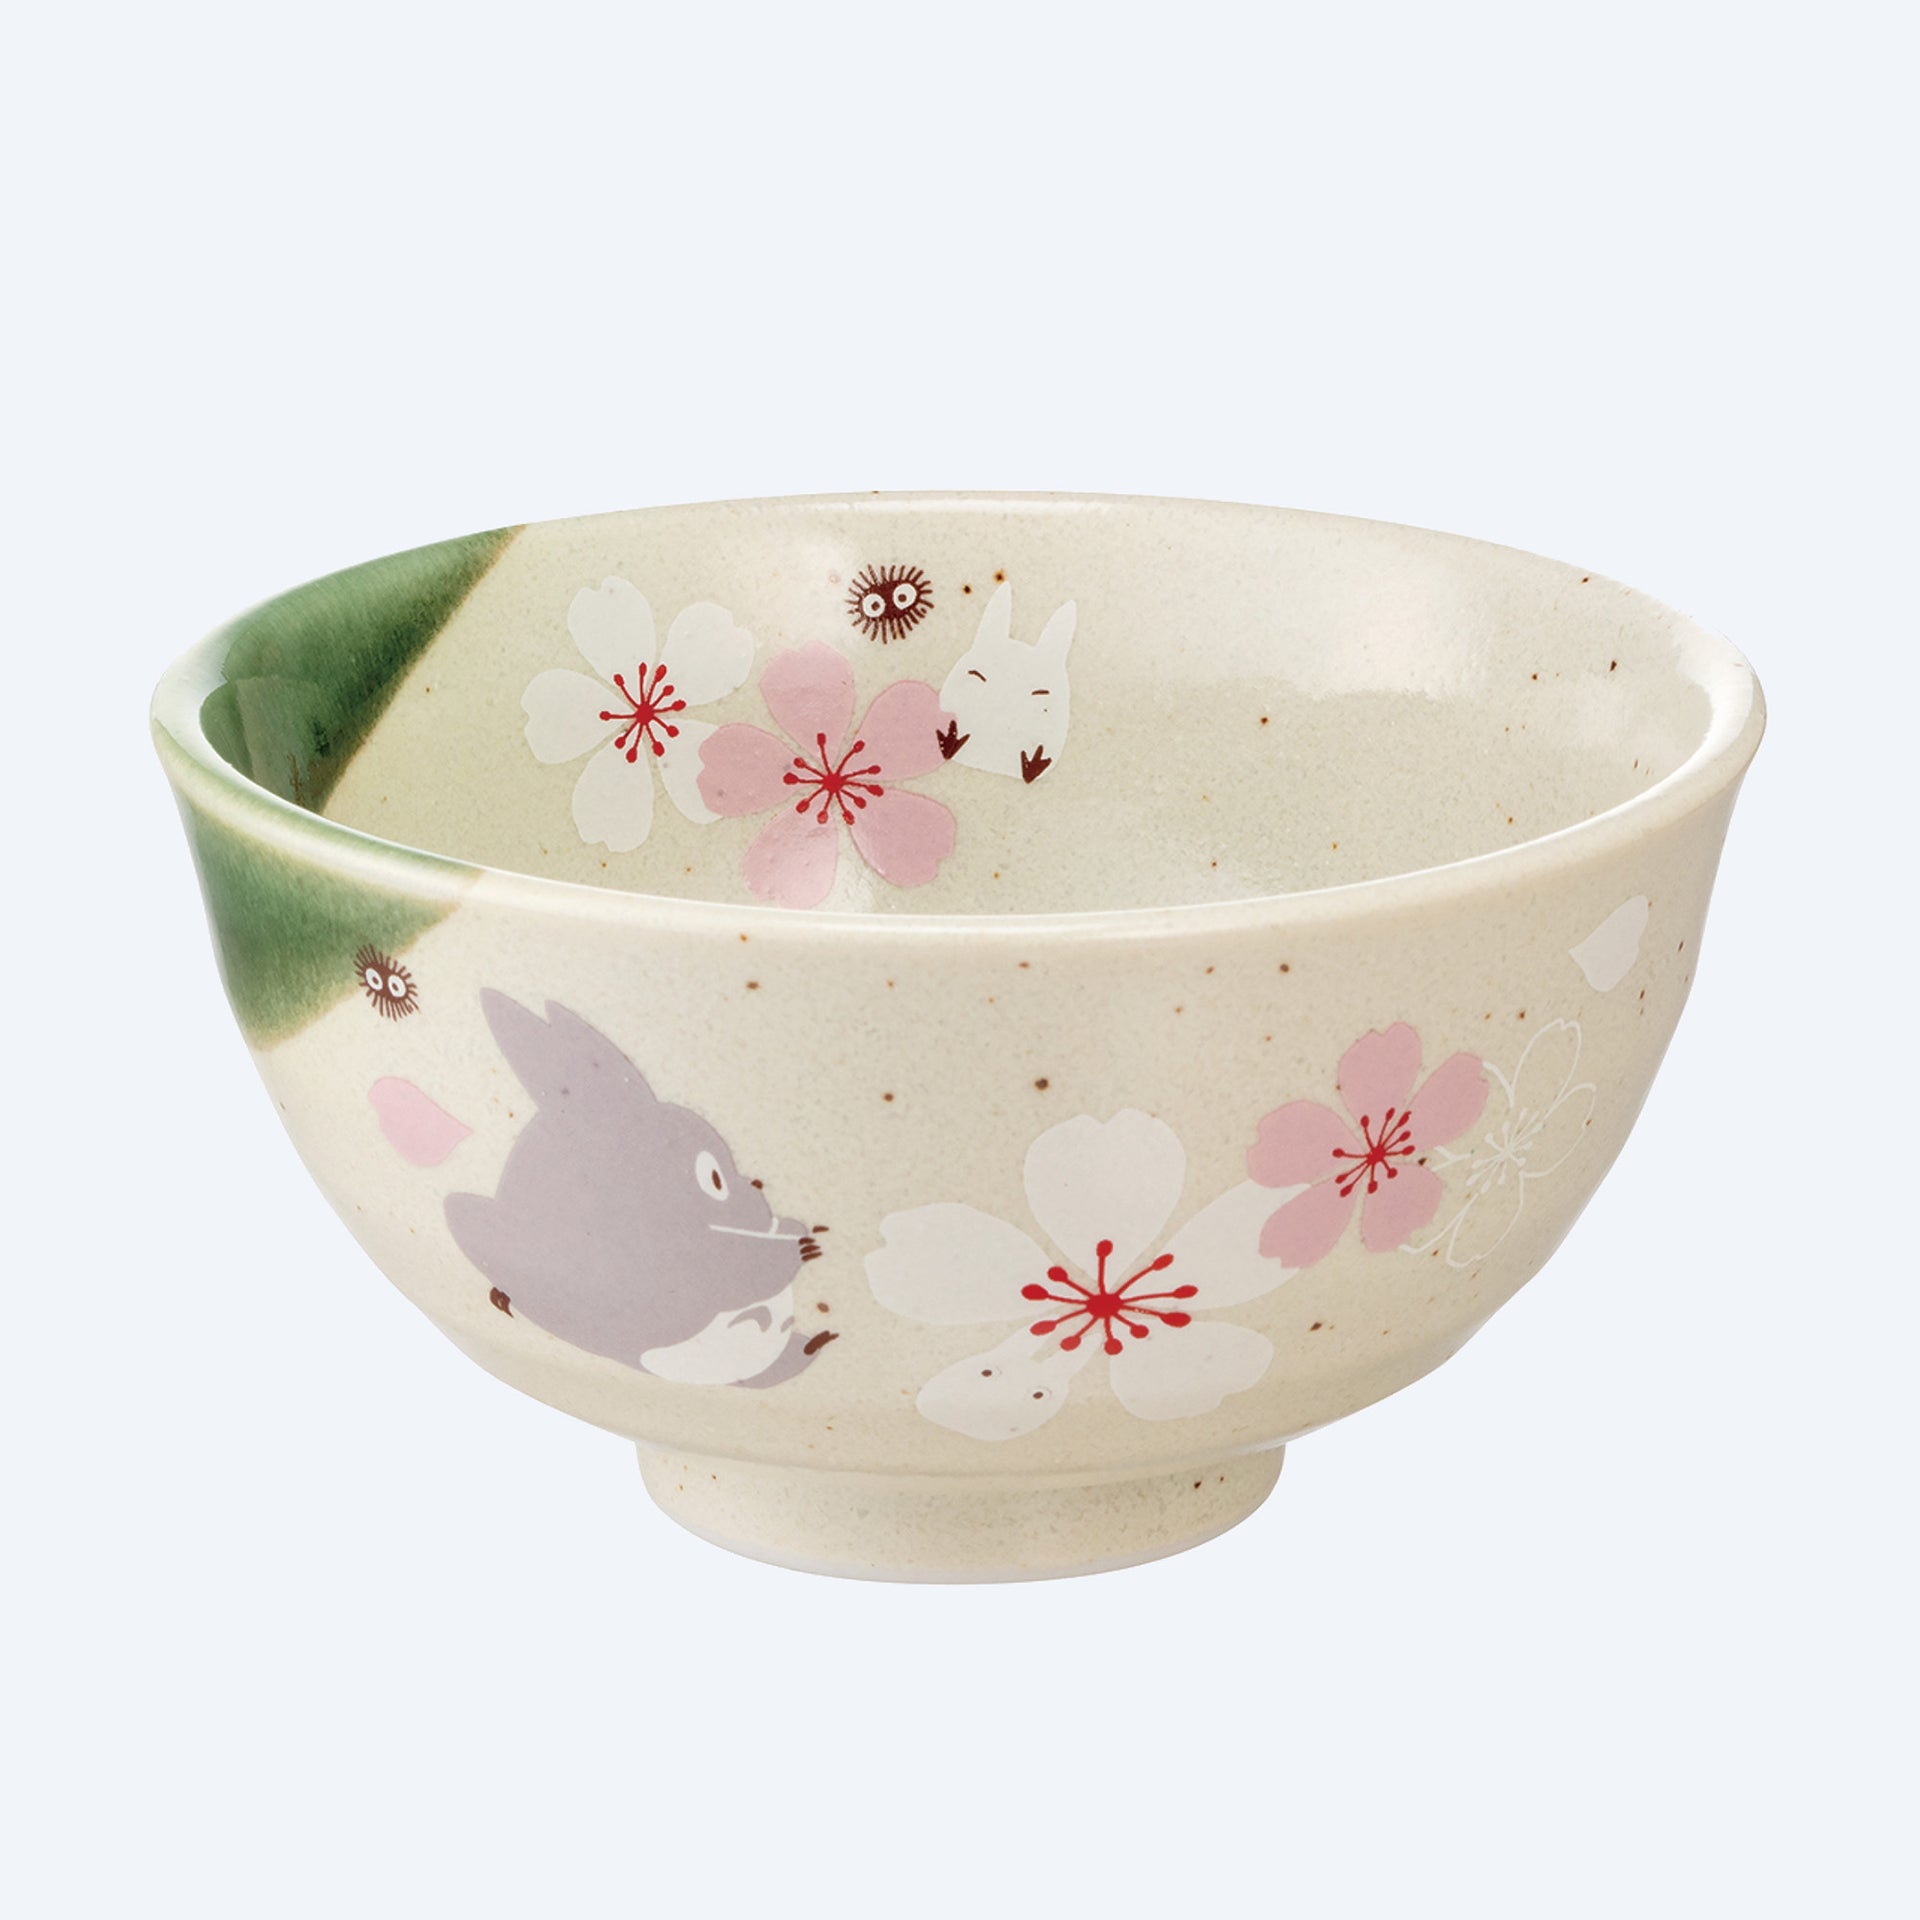 Totoro Traditional Japanese Dish Series - Small Rice Bowl Studio Ghibli